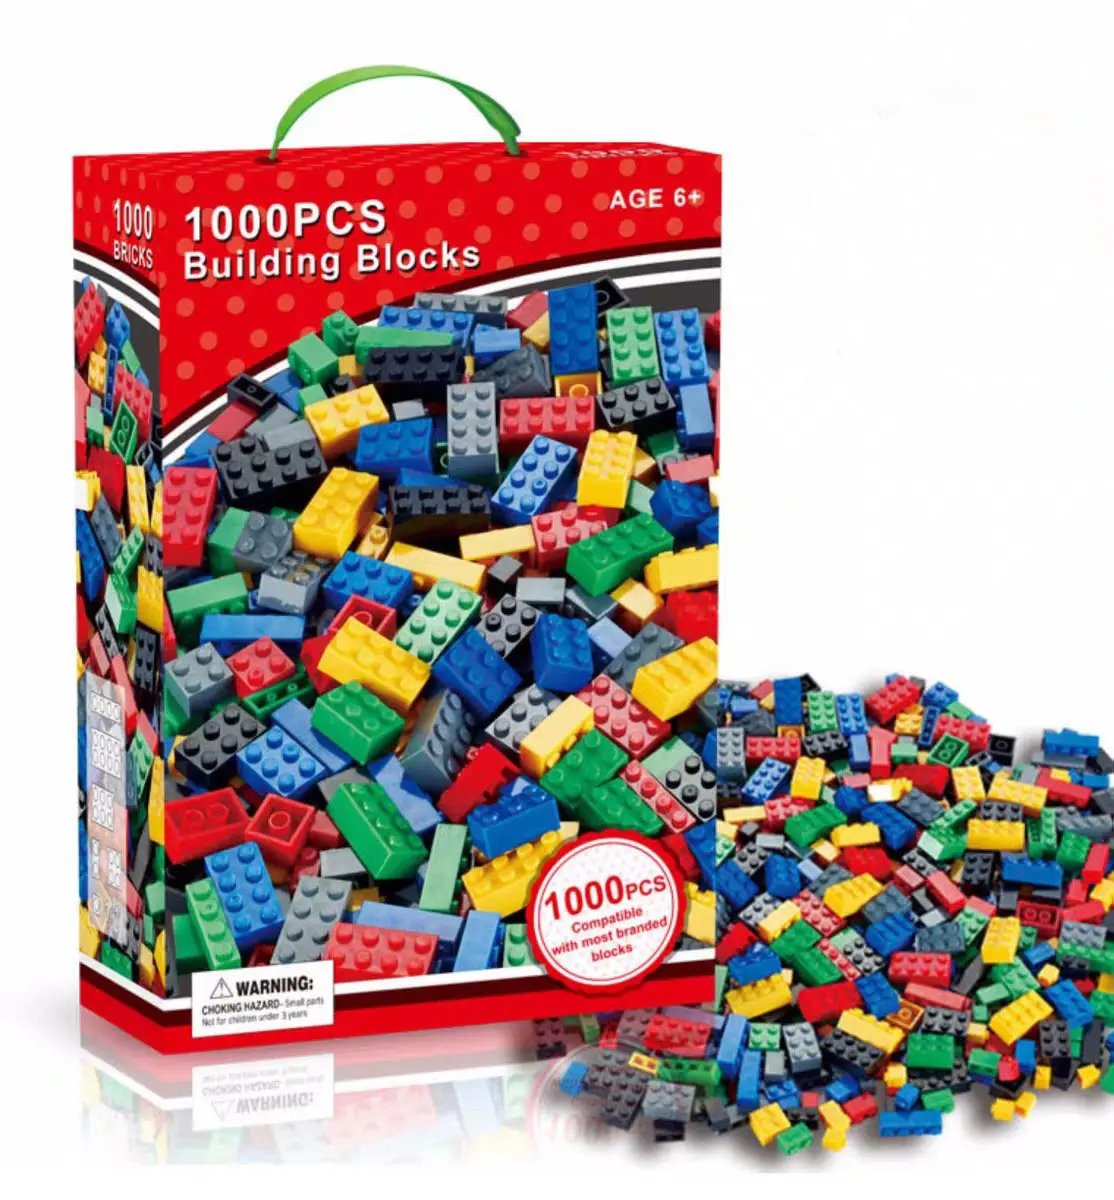 1000pcs Classic Legoing ABS Building Blocks Sets DIY Bricks education toys Compatible building block toys for Children